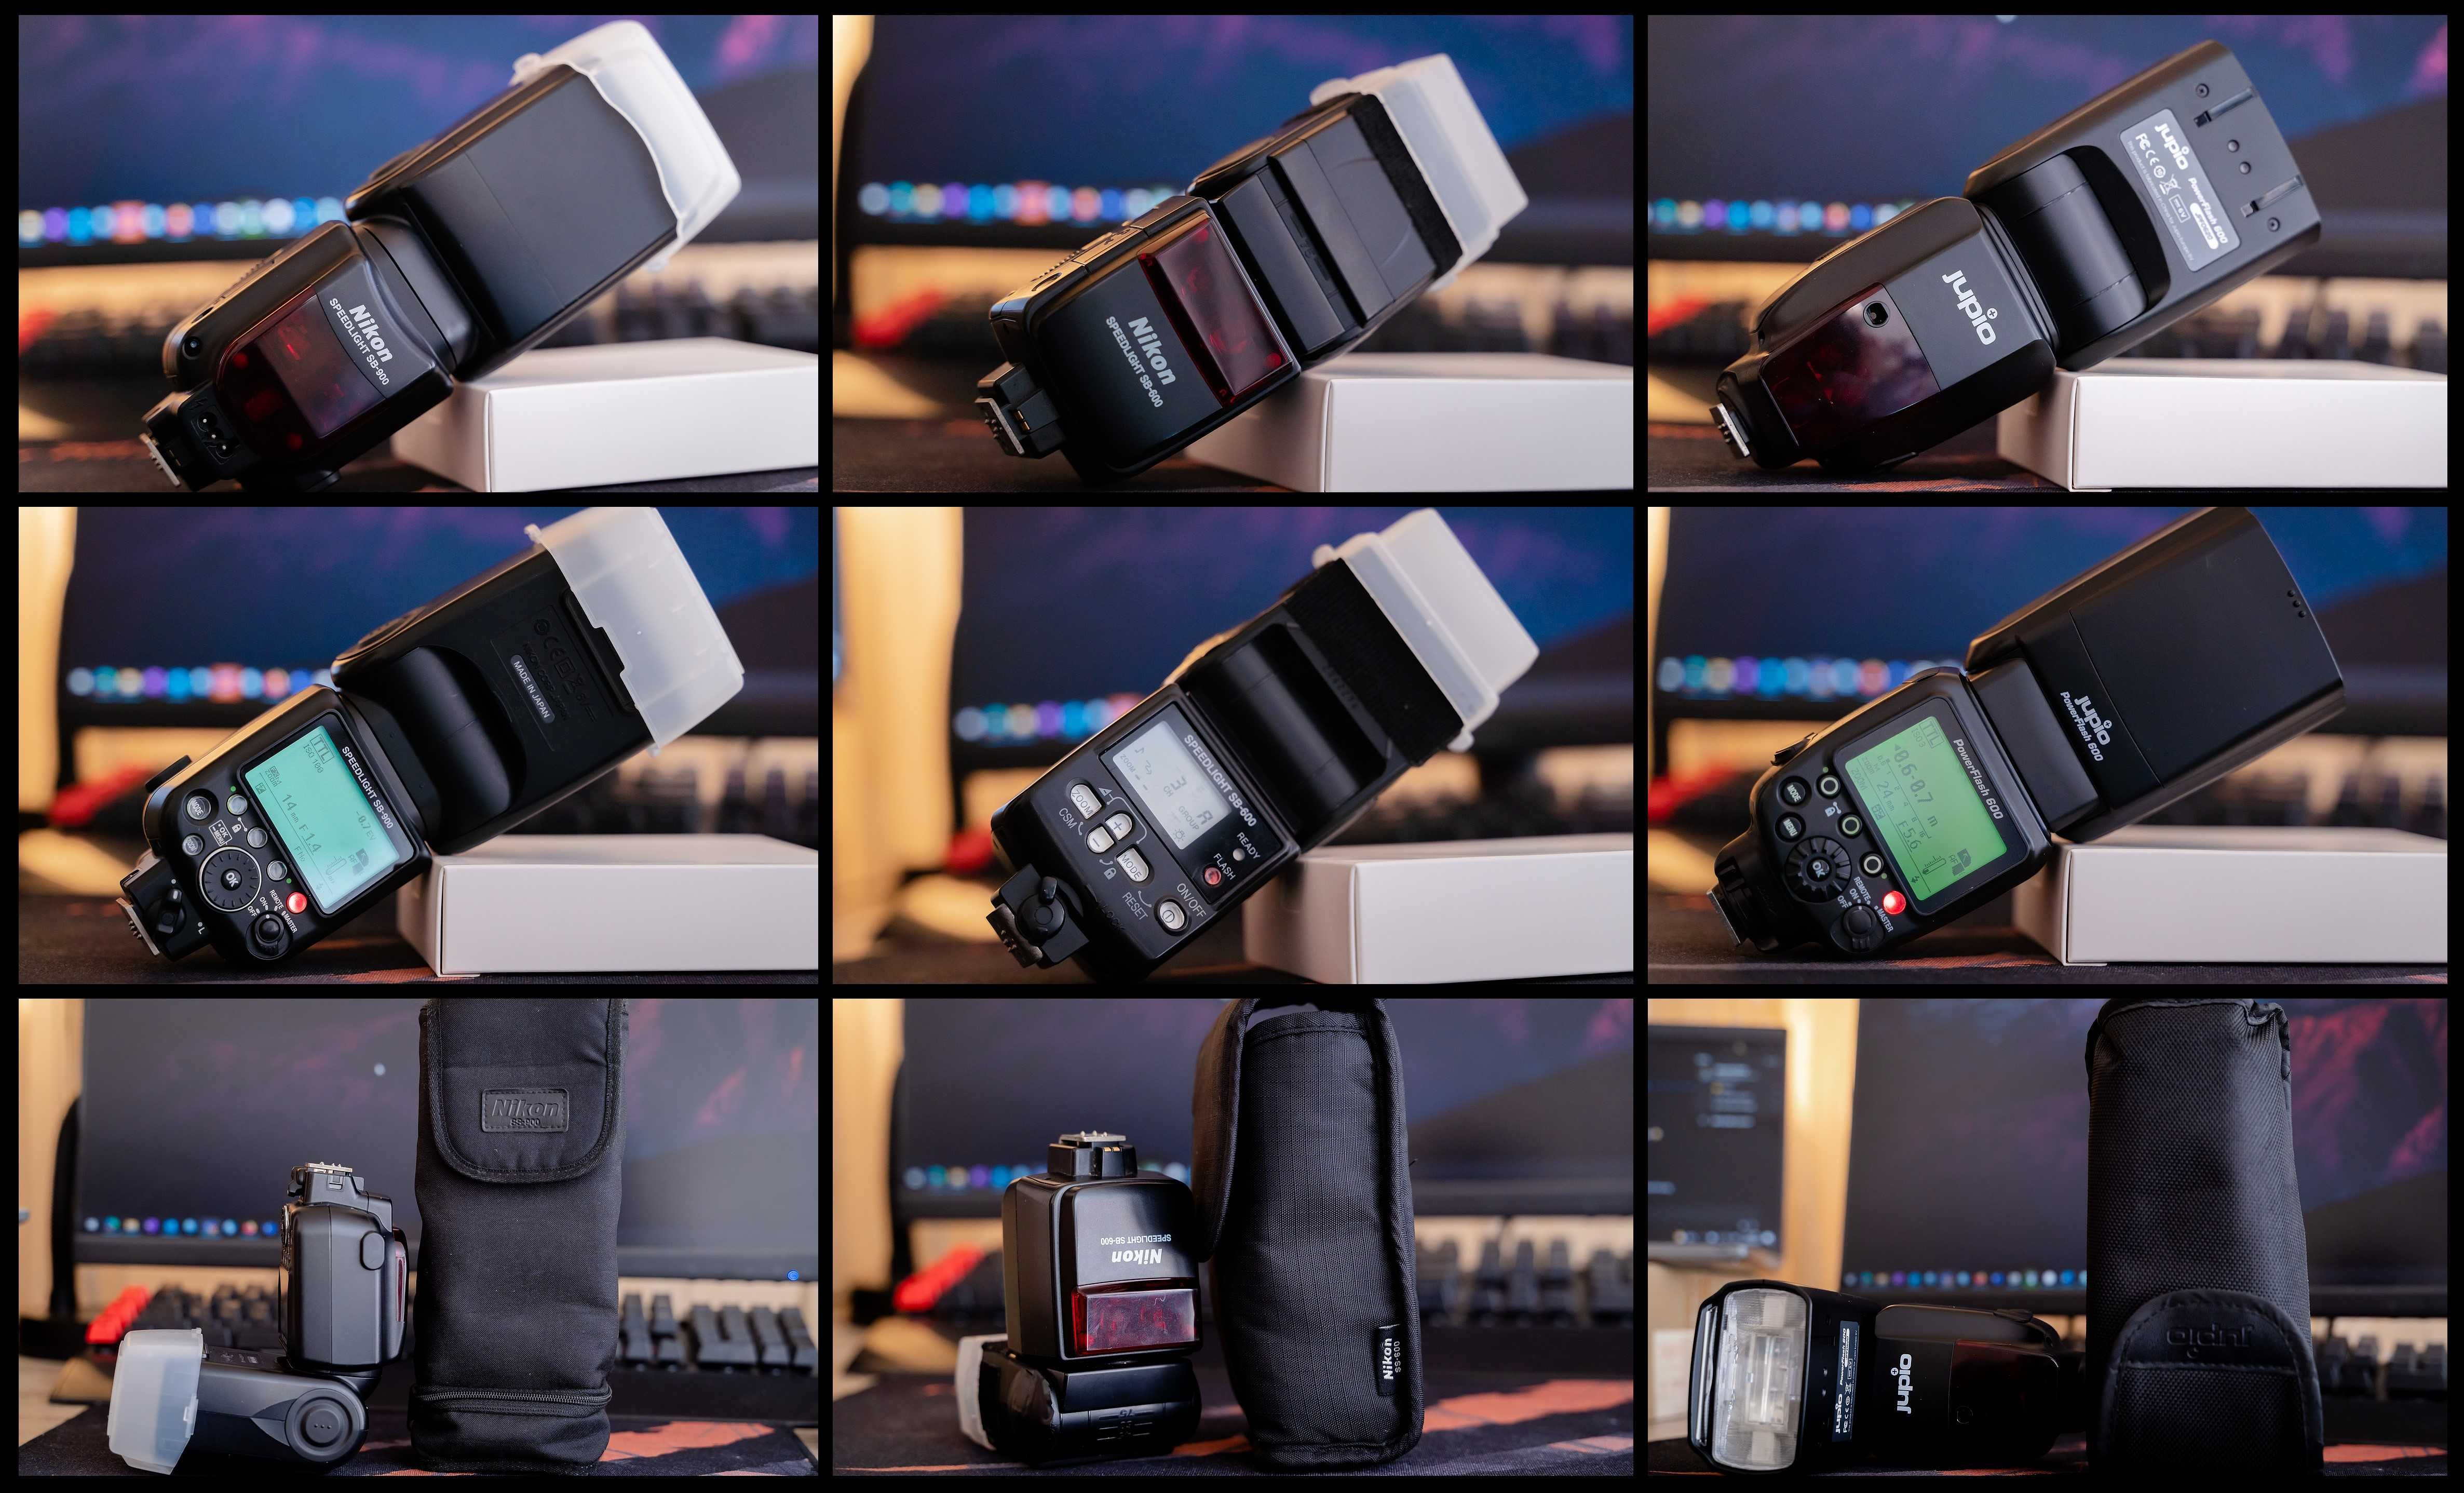 Pachet Nikon D750 cu obiective si flashuri